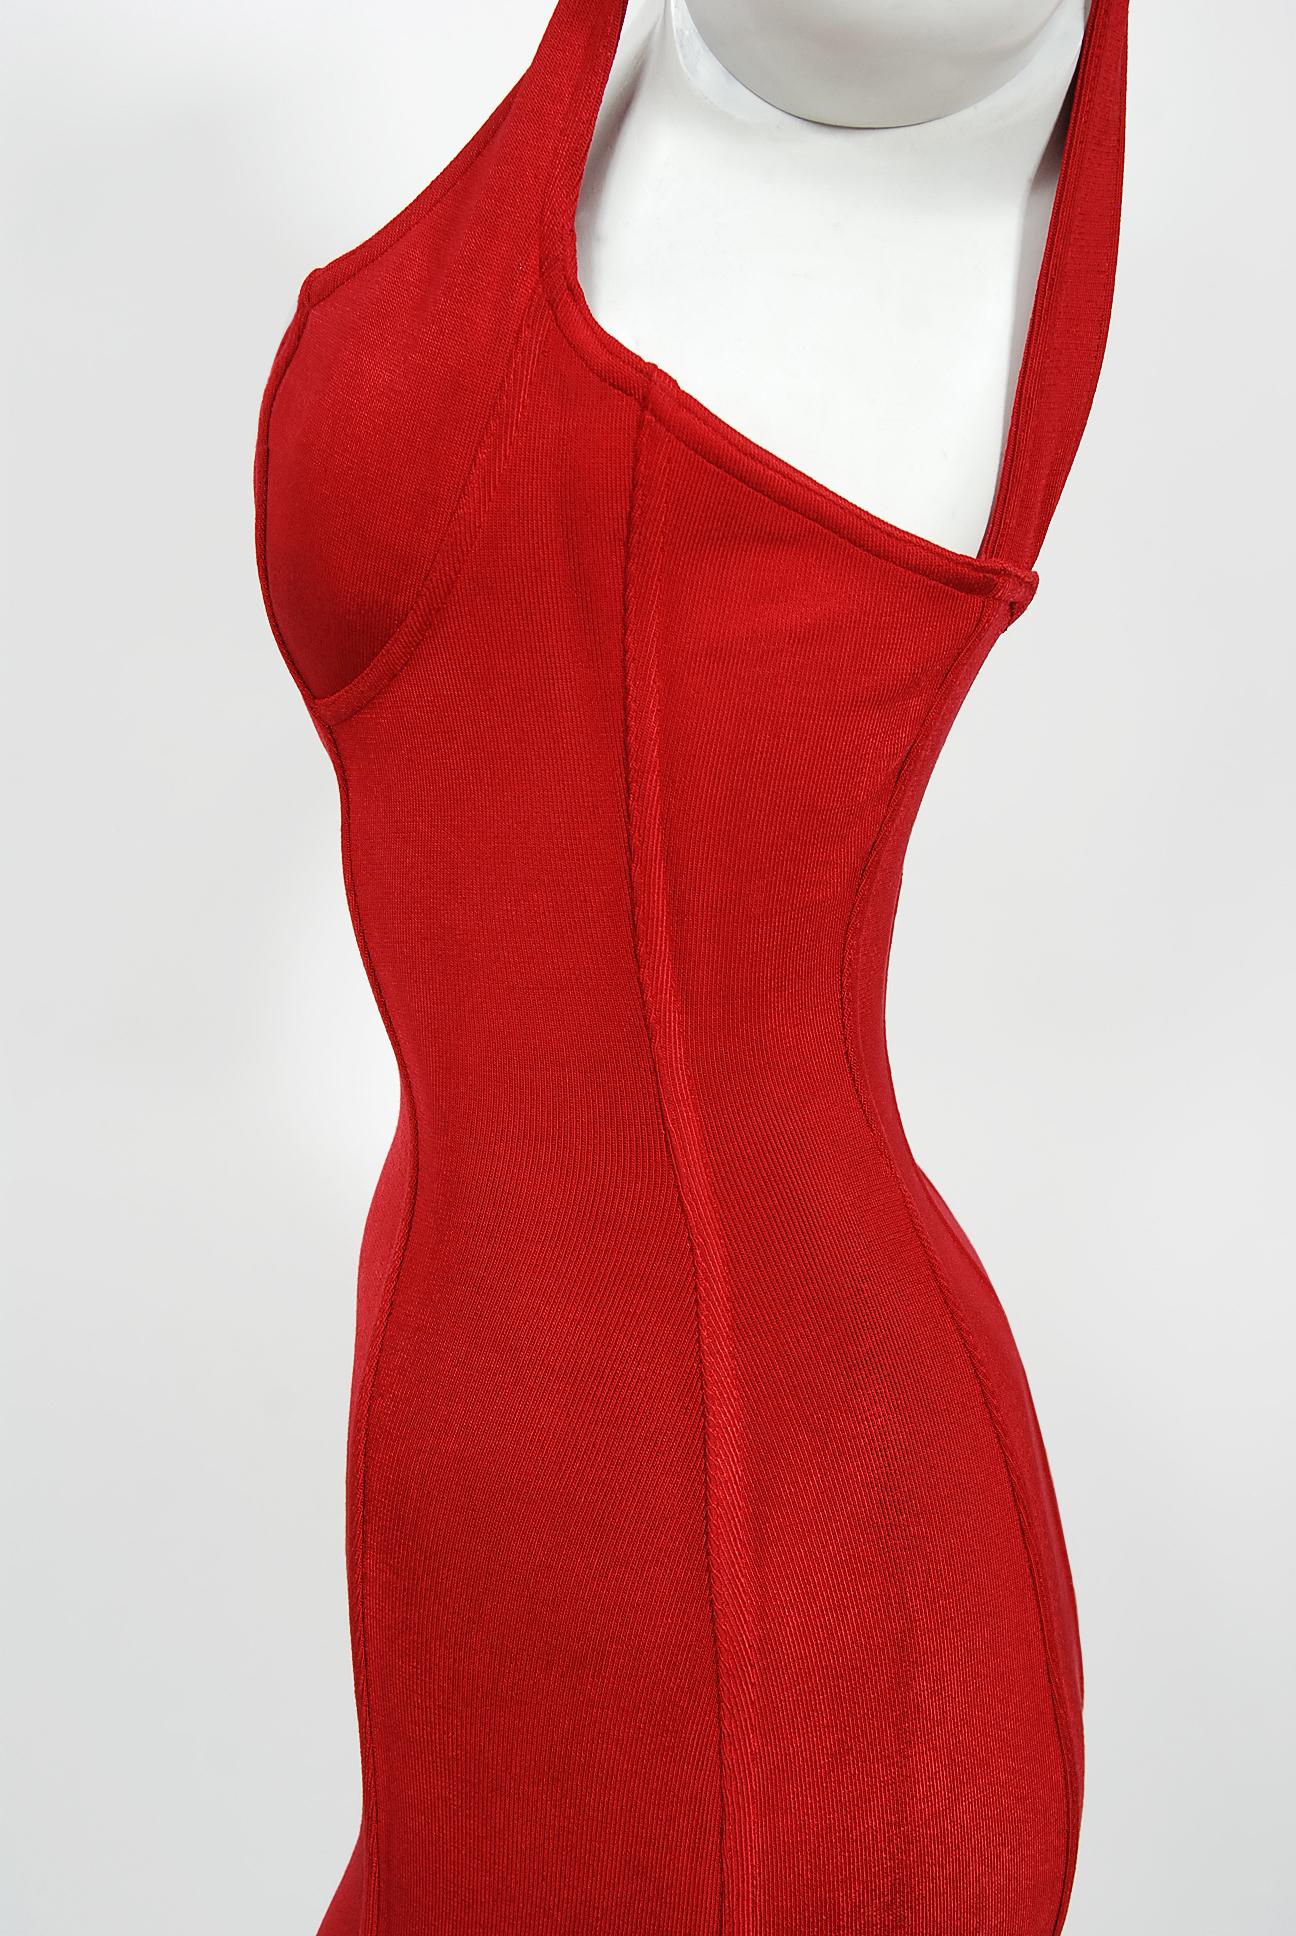 Vintage 1991 Azzedine Alaia Documented Runway Red Bustier Bodycon Mini Dress  3